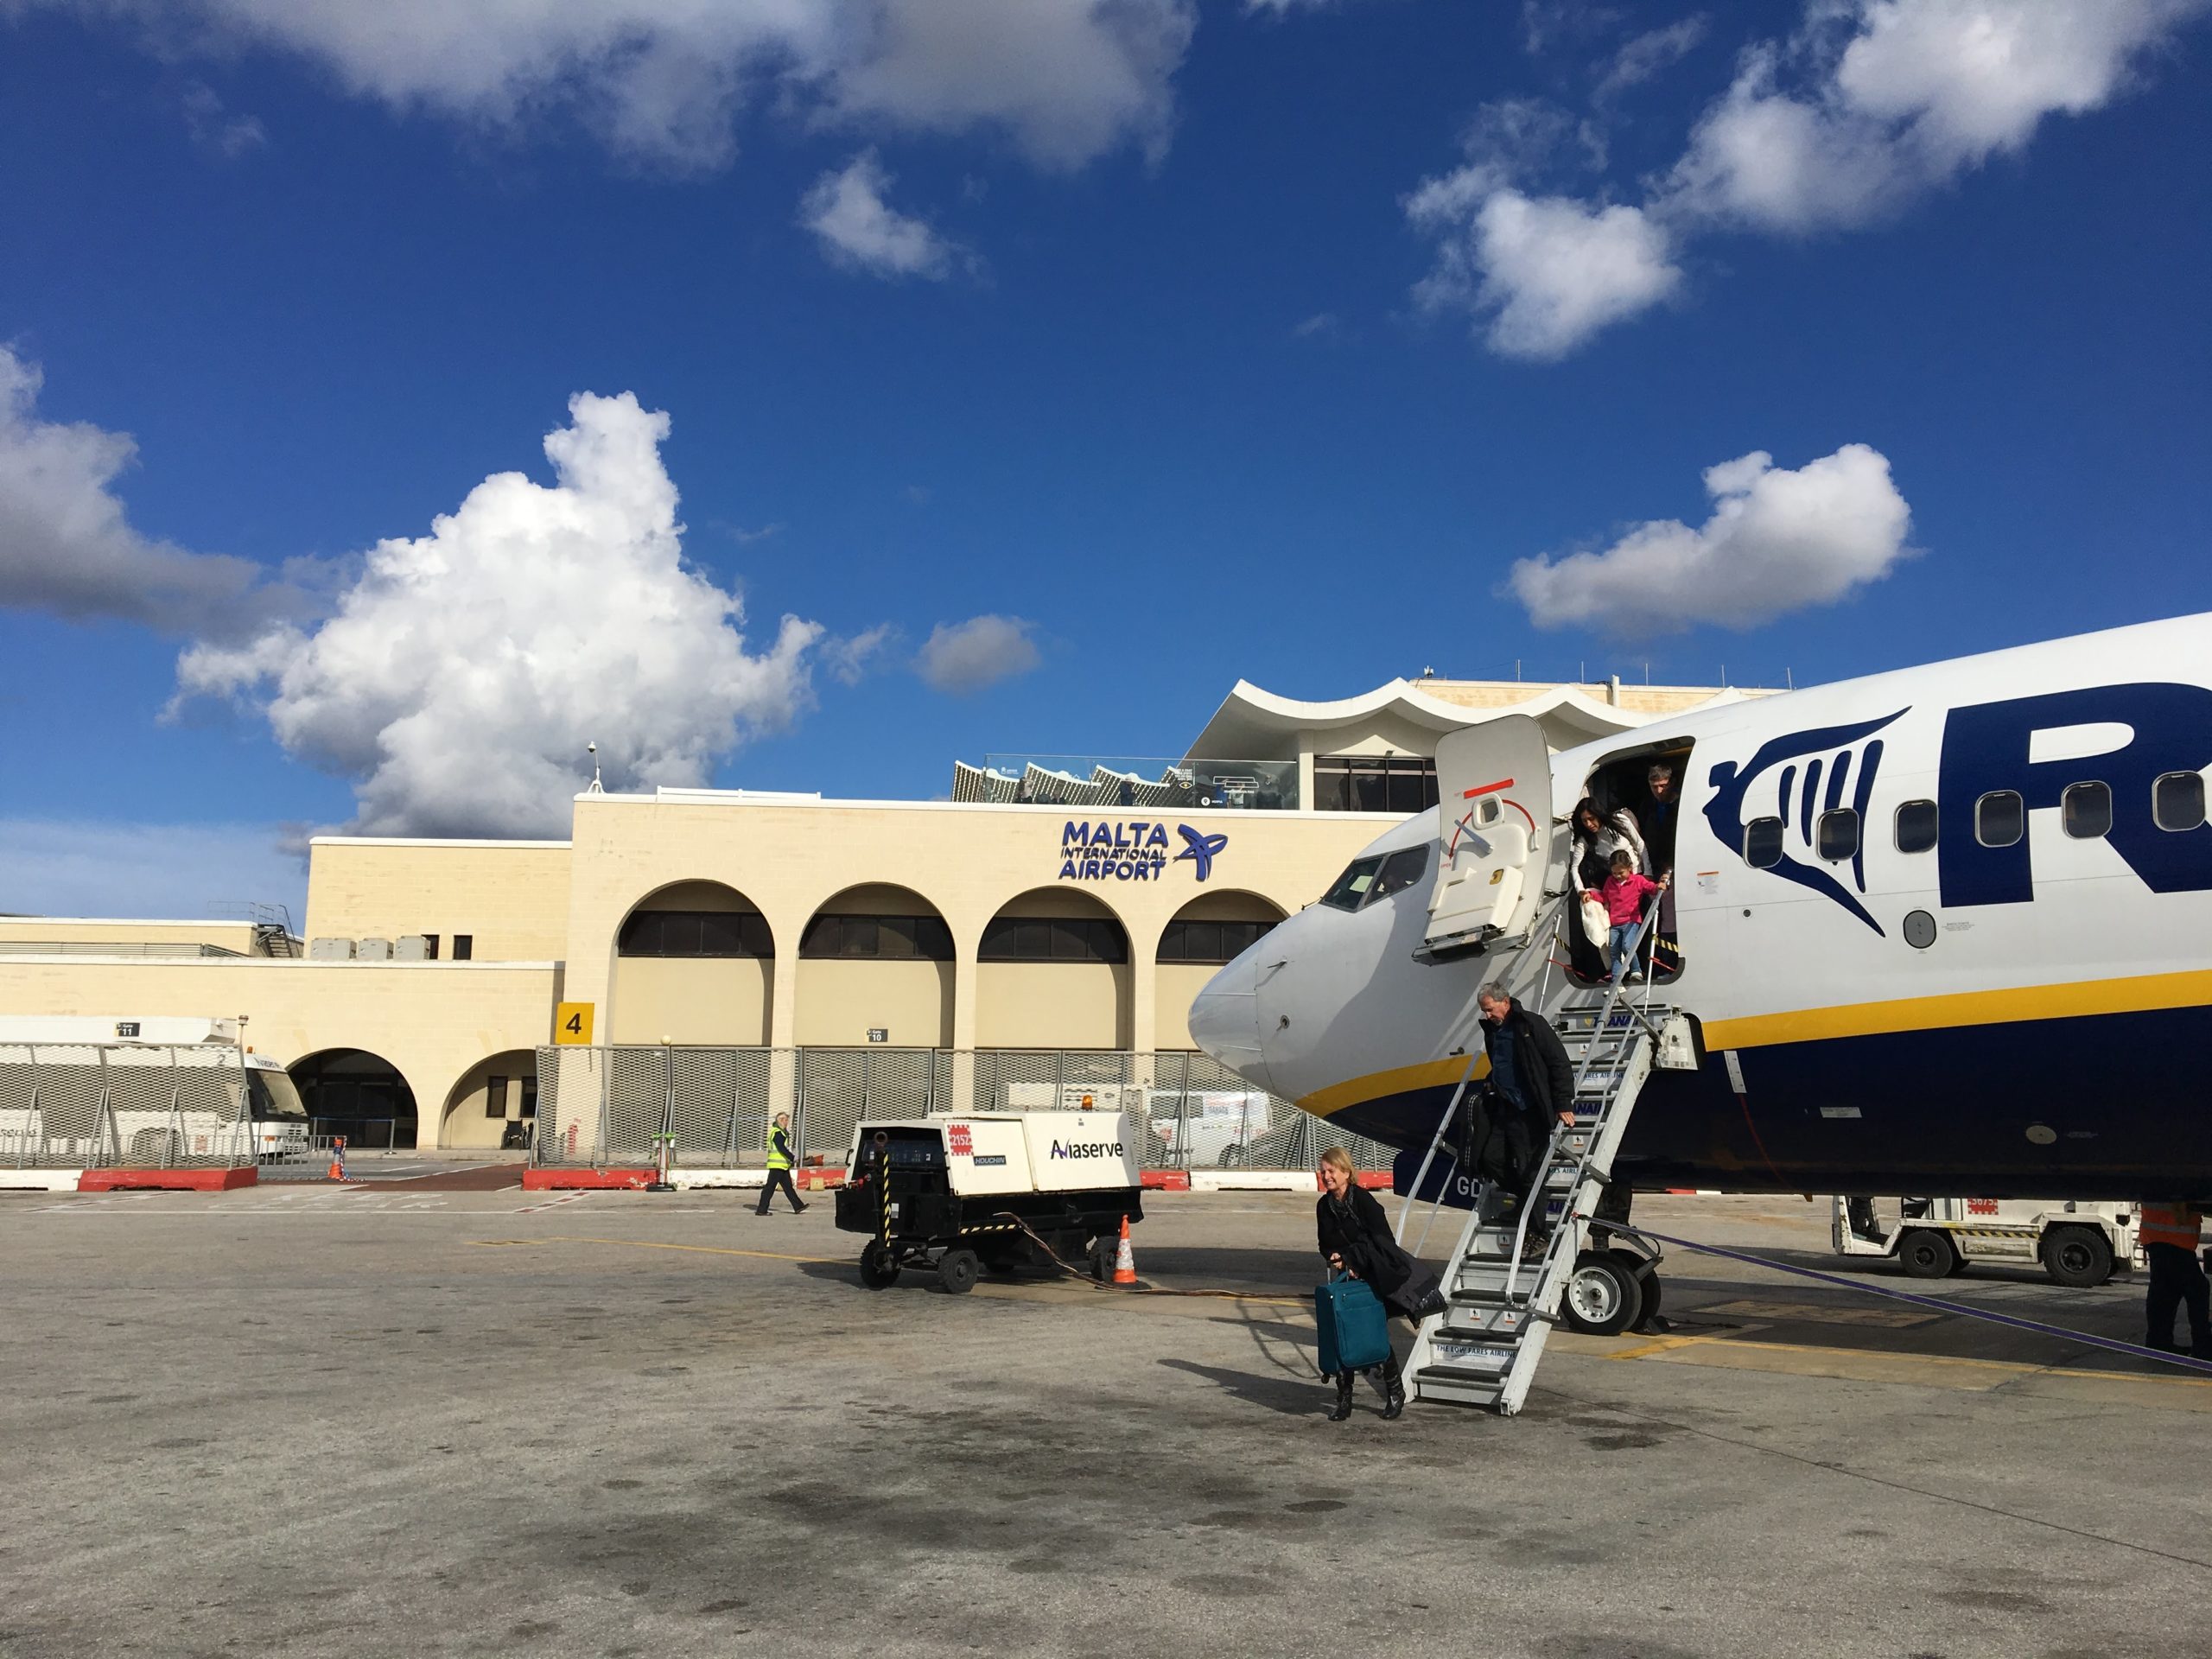 Ryan Air arrives at Malta Airport.